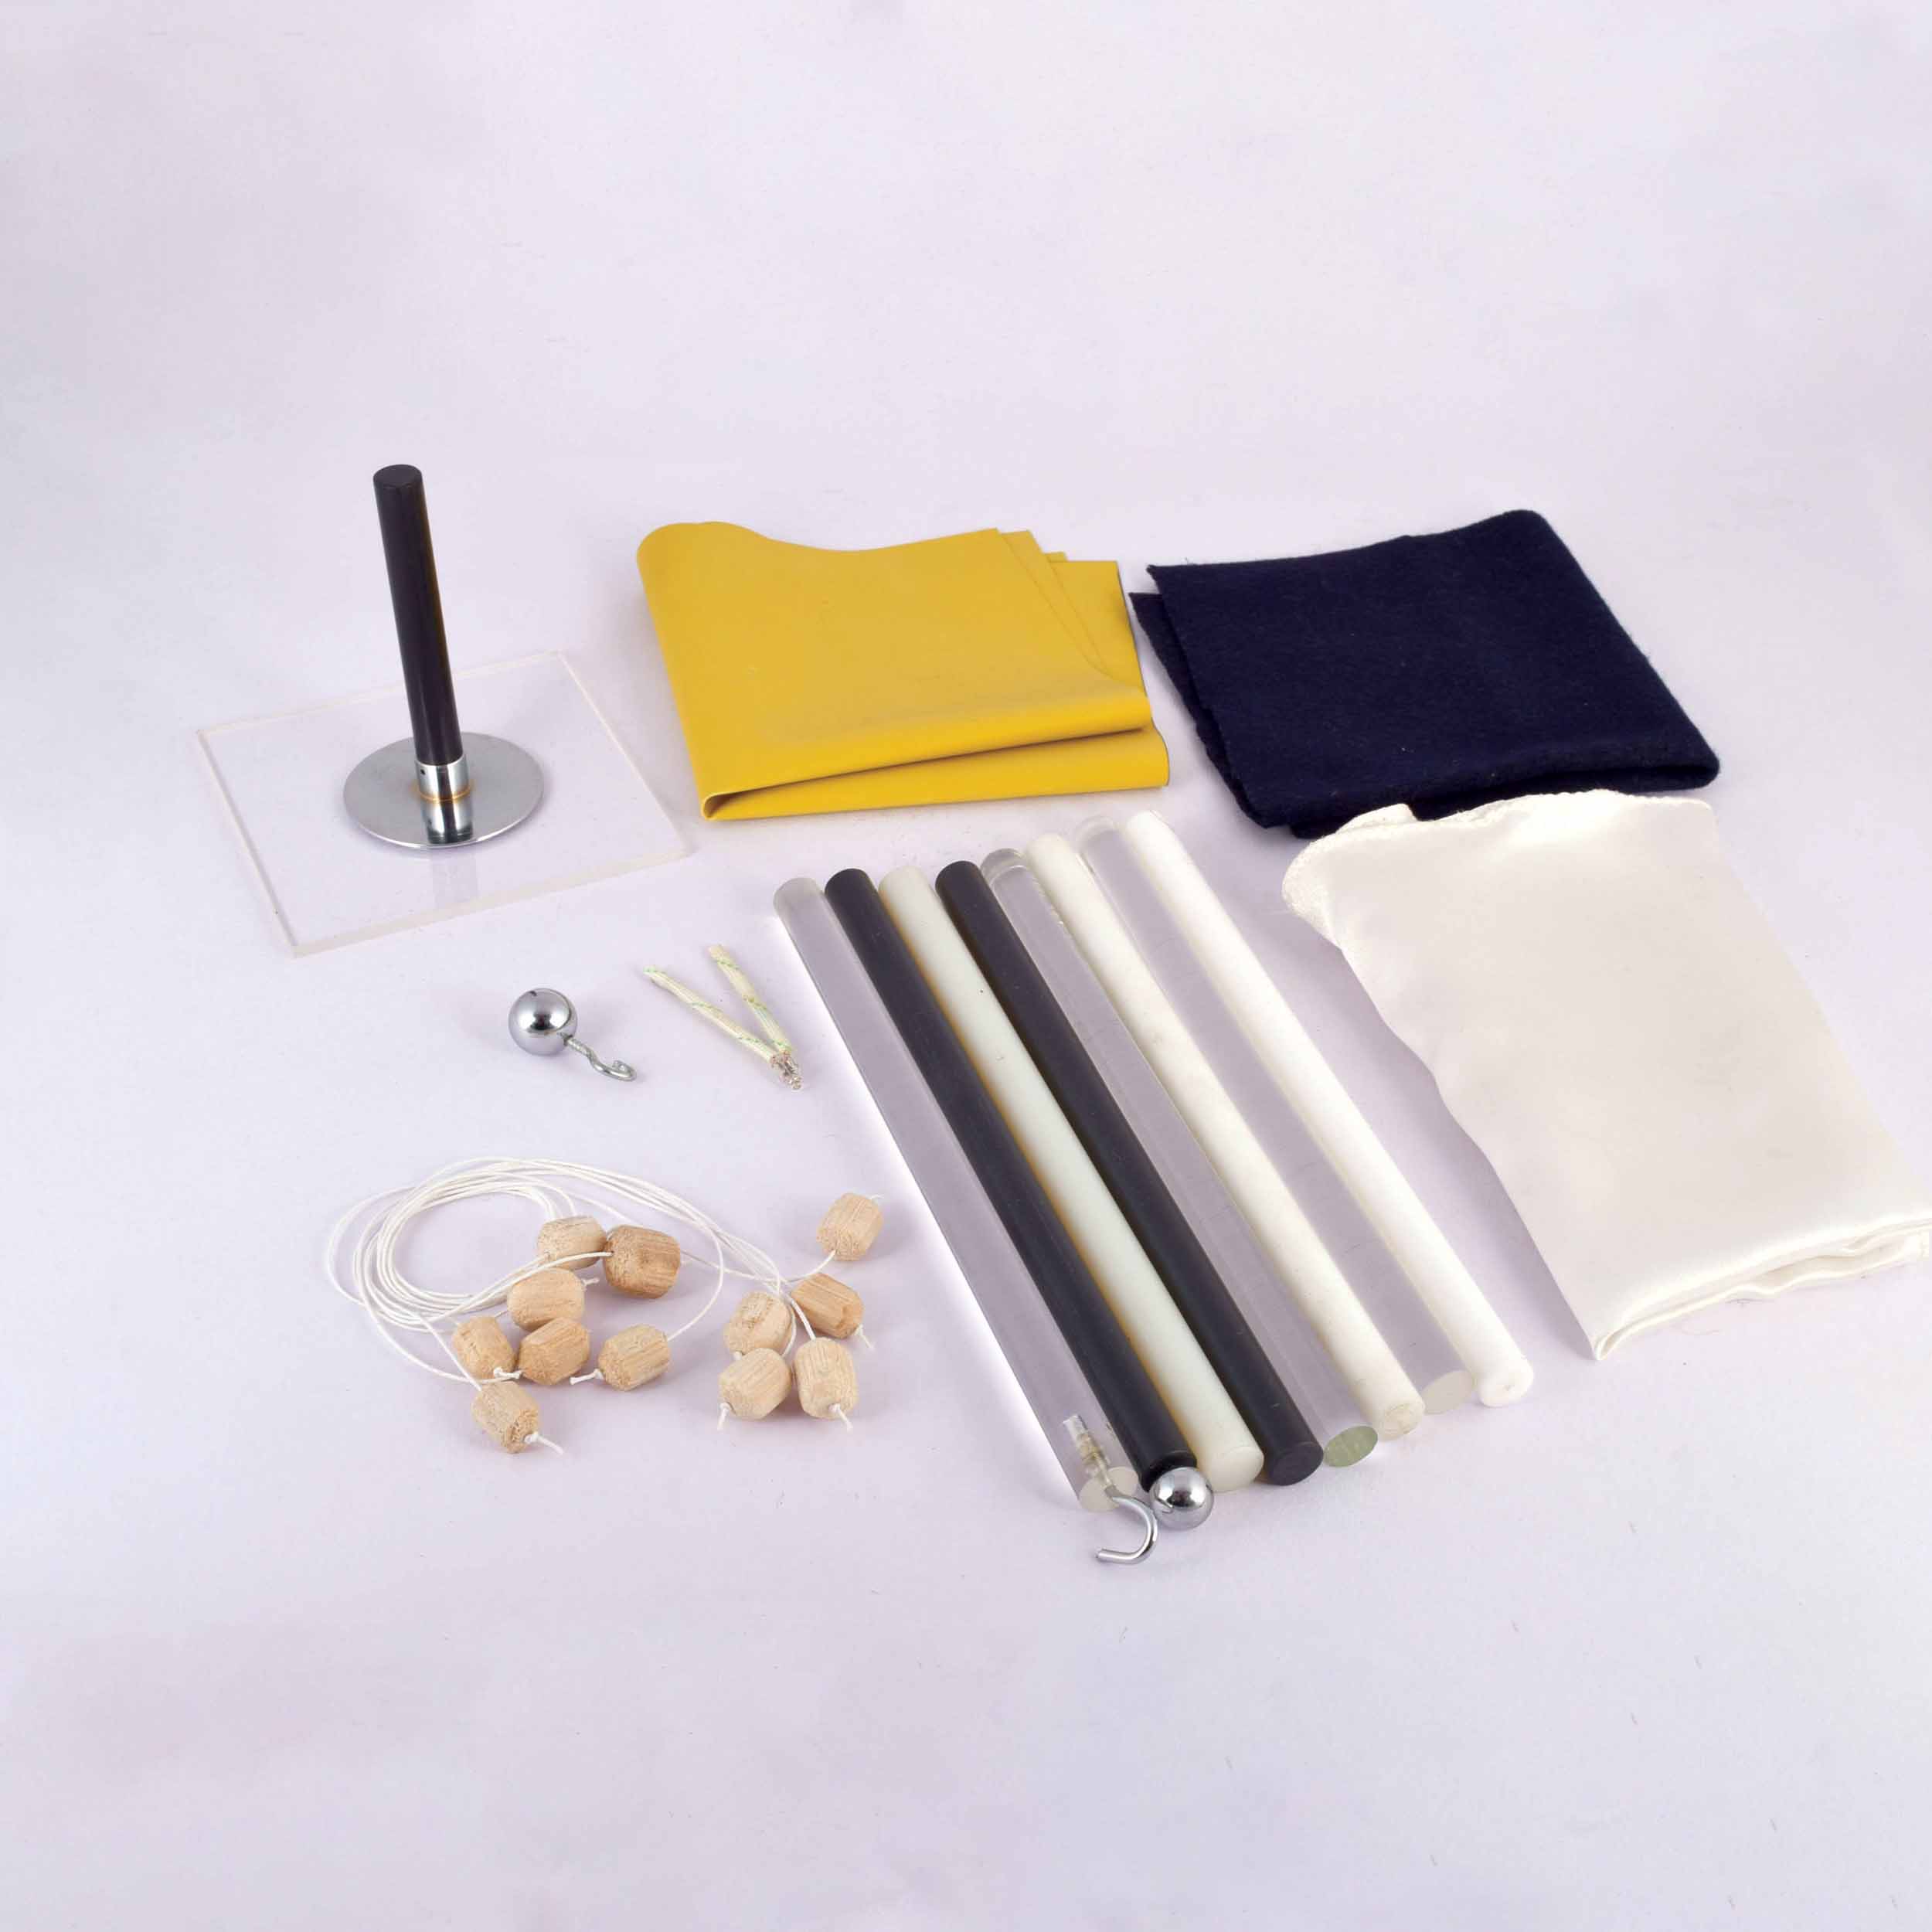 Electrostatic Charge Kit